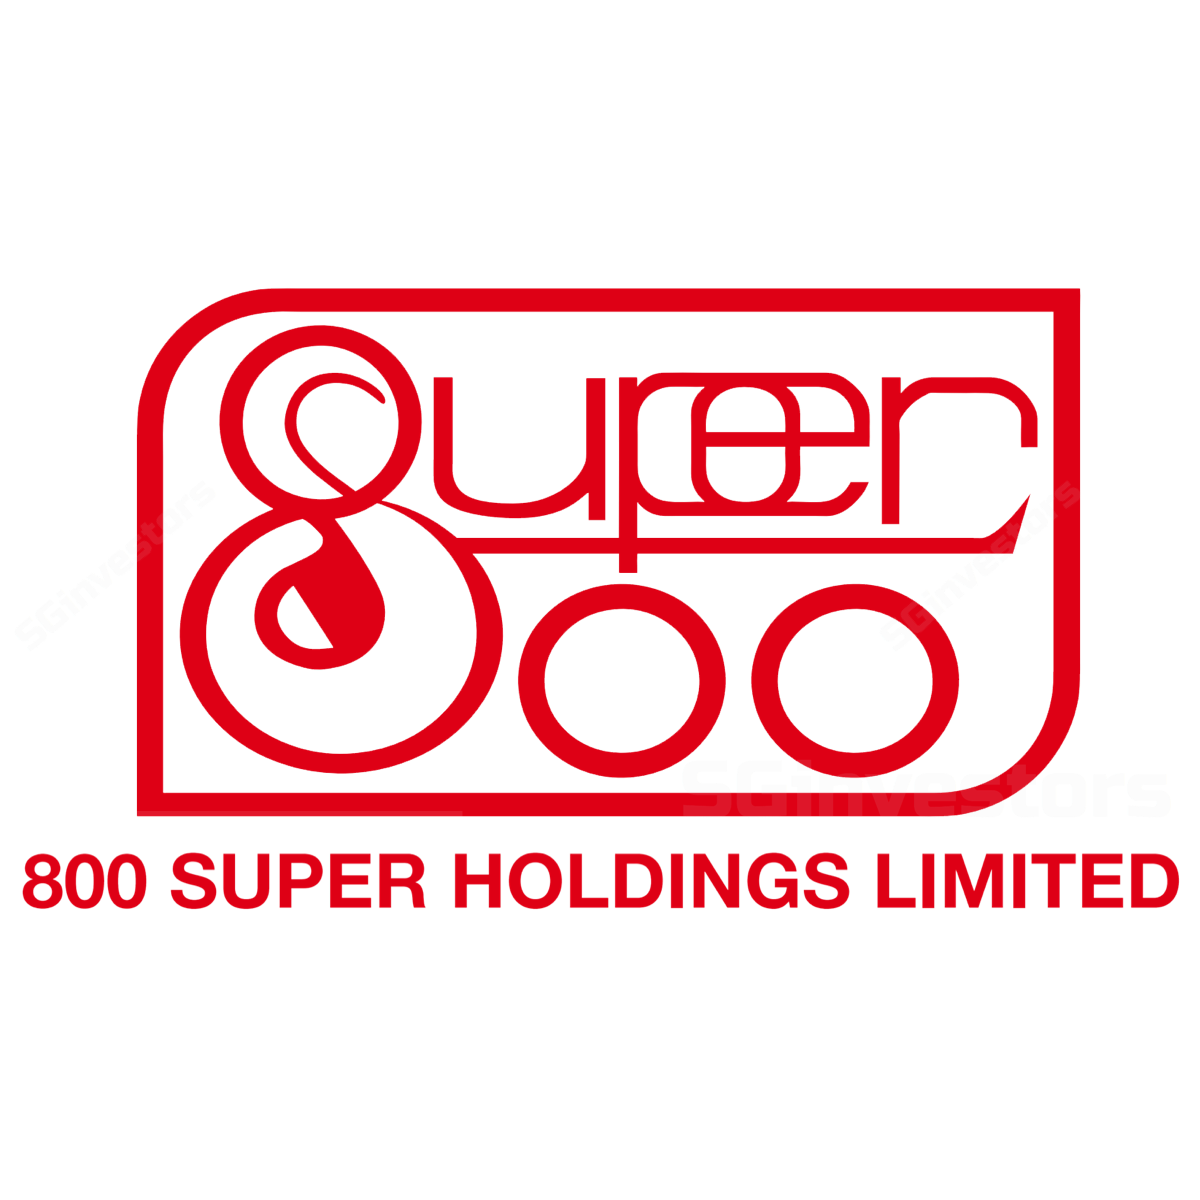 800 Super Holdings